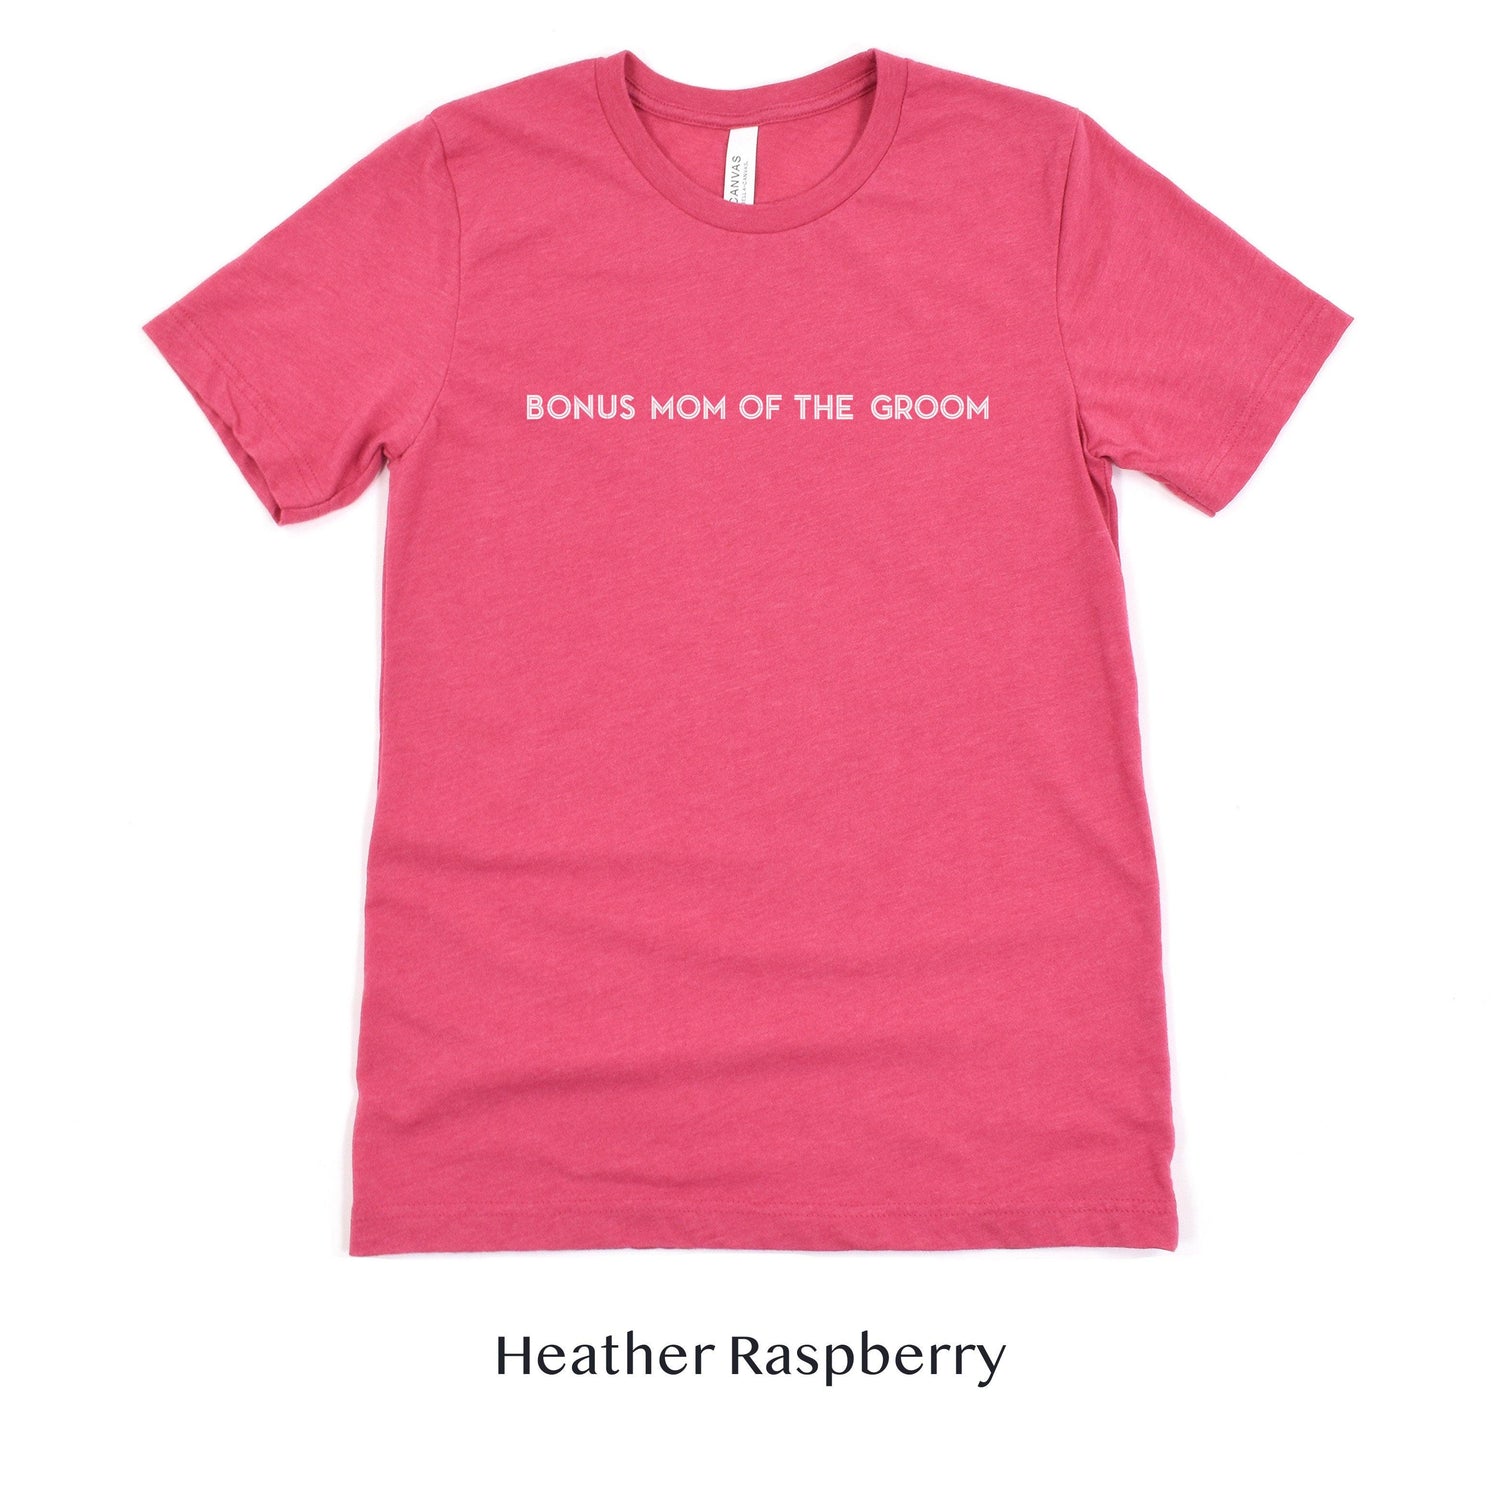 Bonus Mom of the Groom Shirt - Matching Wedding Party tshirts - Unisex t-shirt by Oaklynn Lane - Hot Pink Raspberry Tee